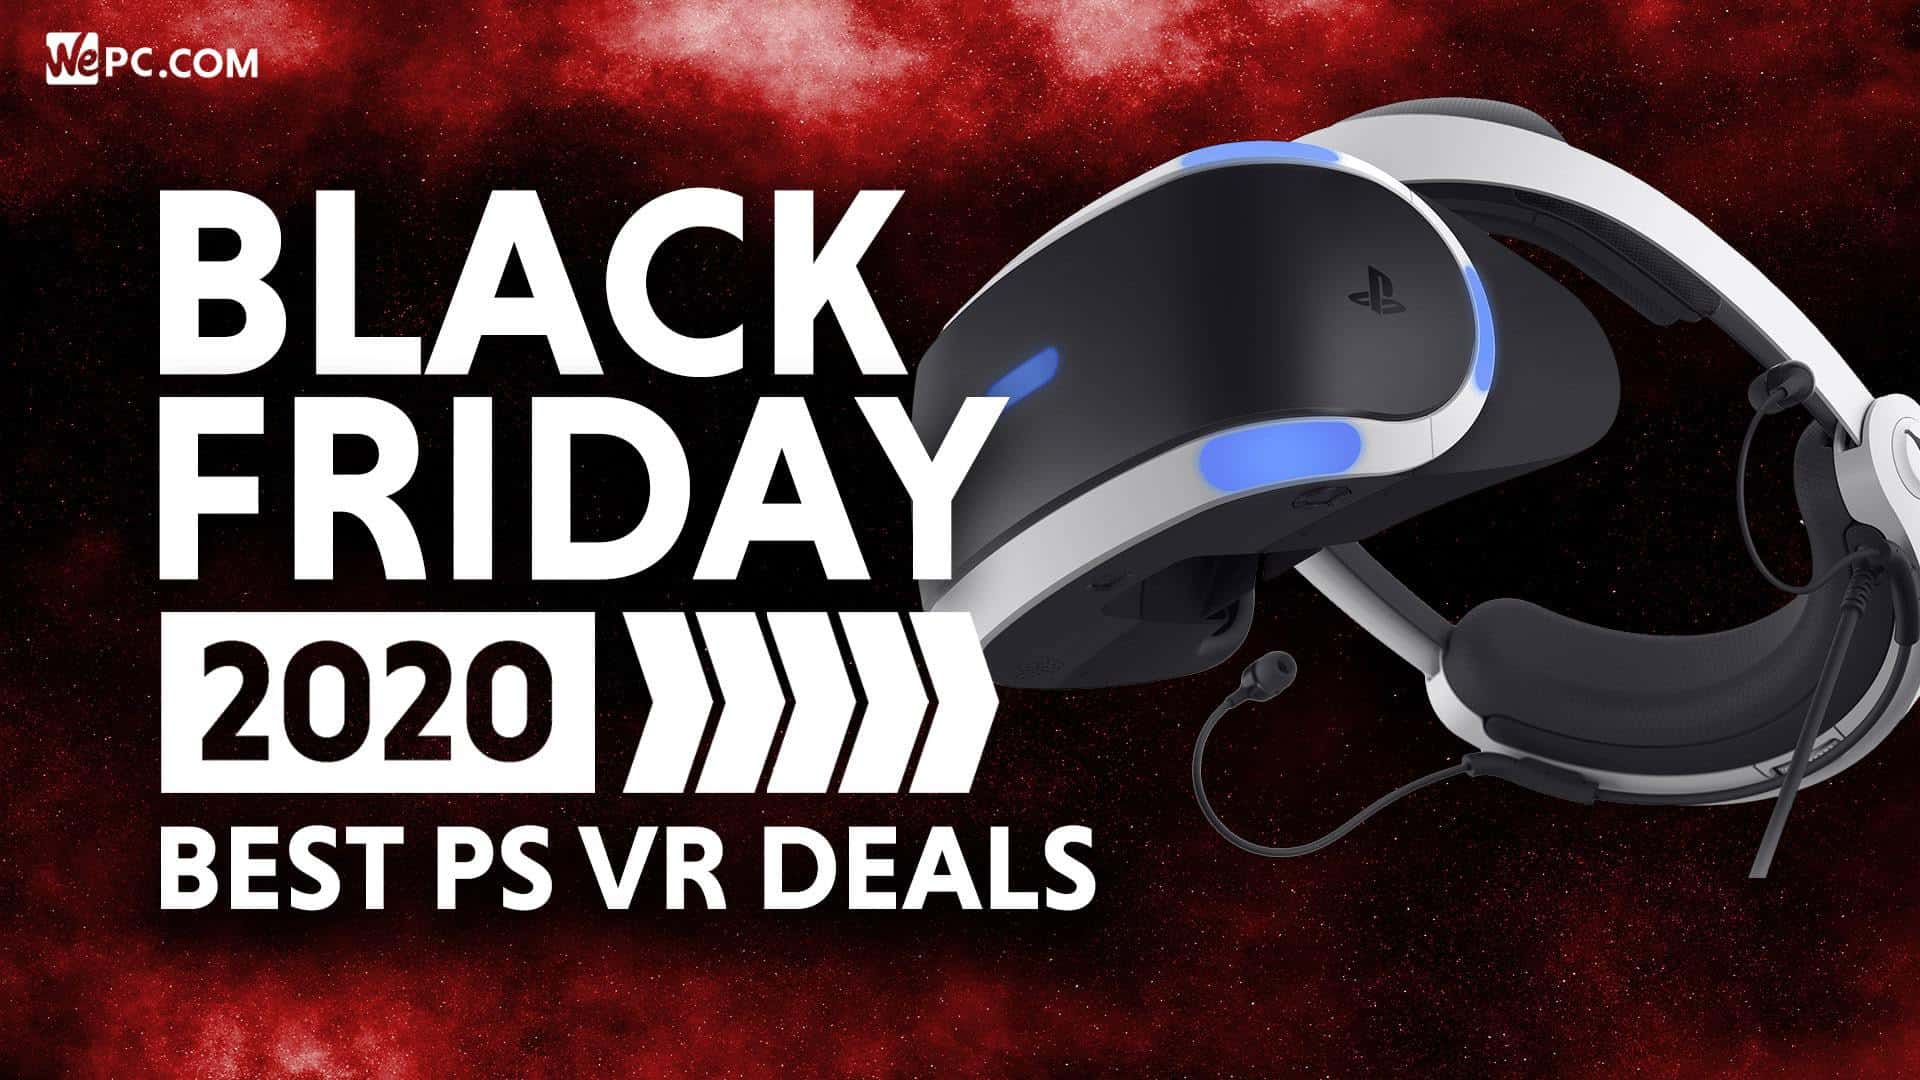 PlayStation VR Black Friday Deals | WePC